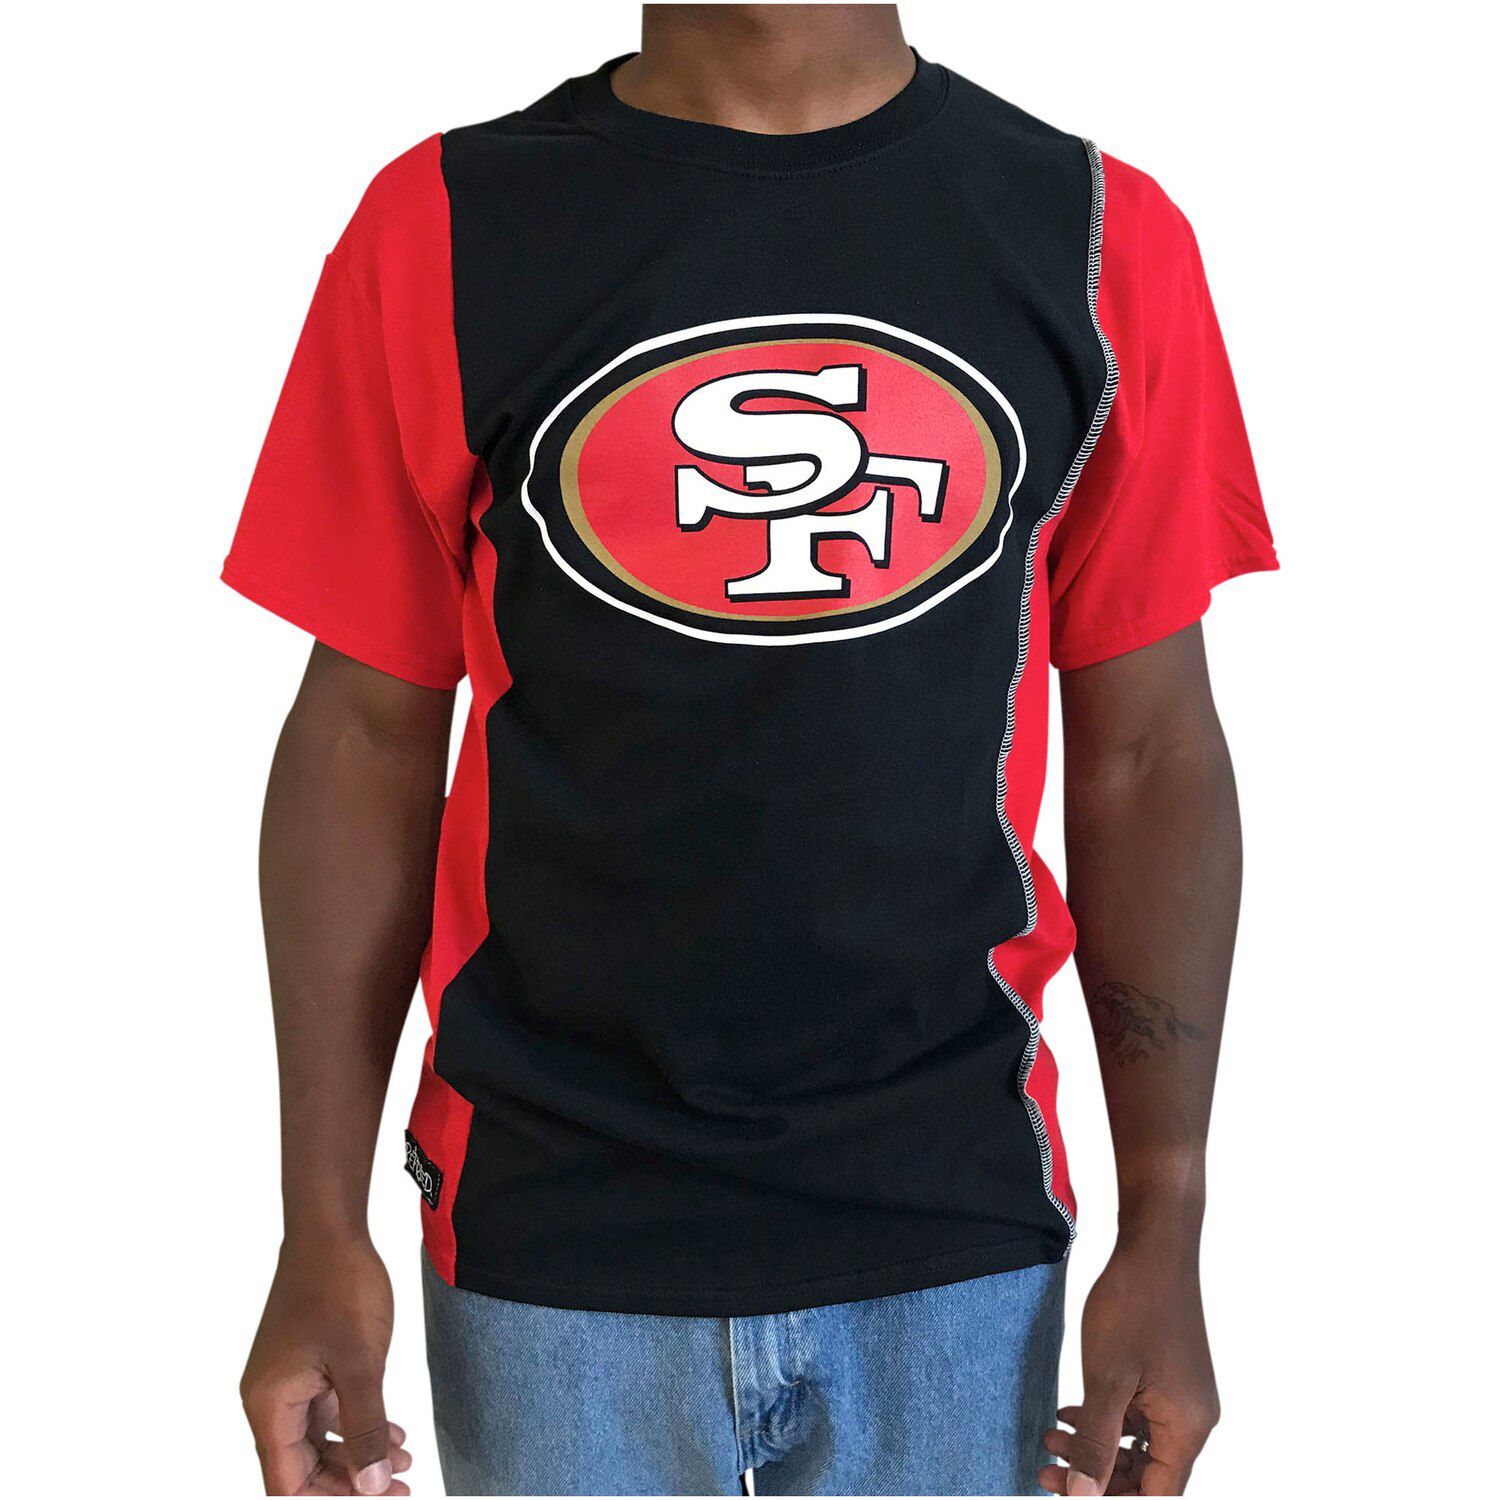 unique 49ers apparel